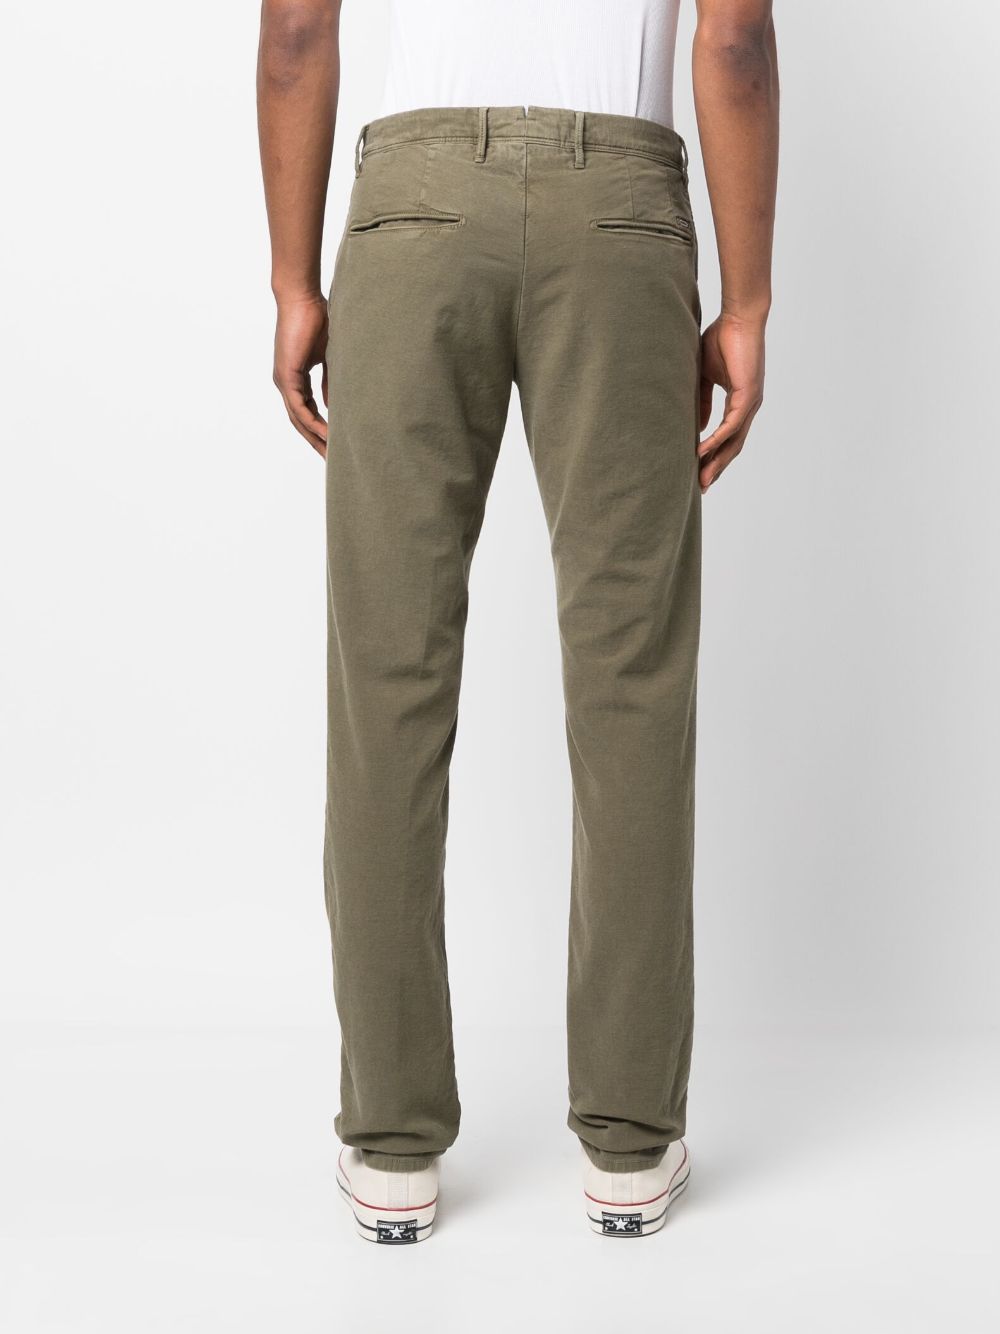 Incotex straight-leg Cotton Trousers - Farfetch